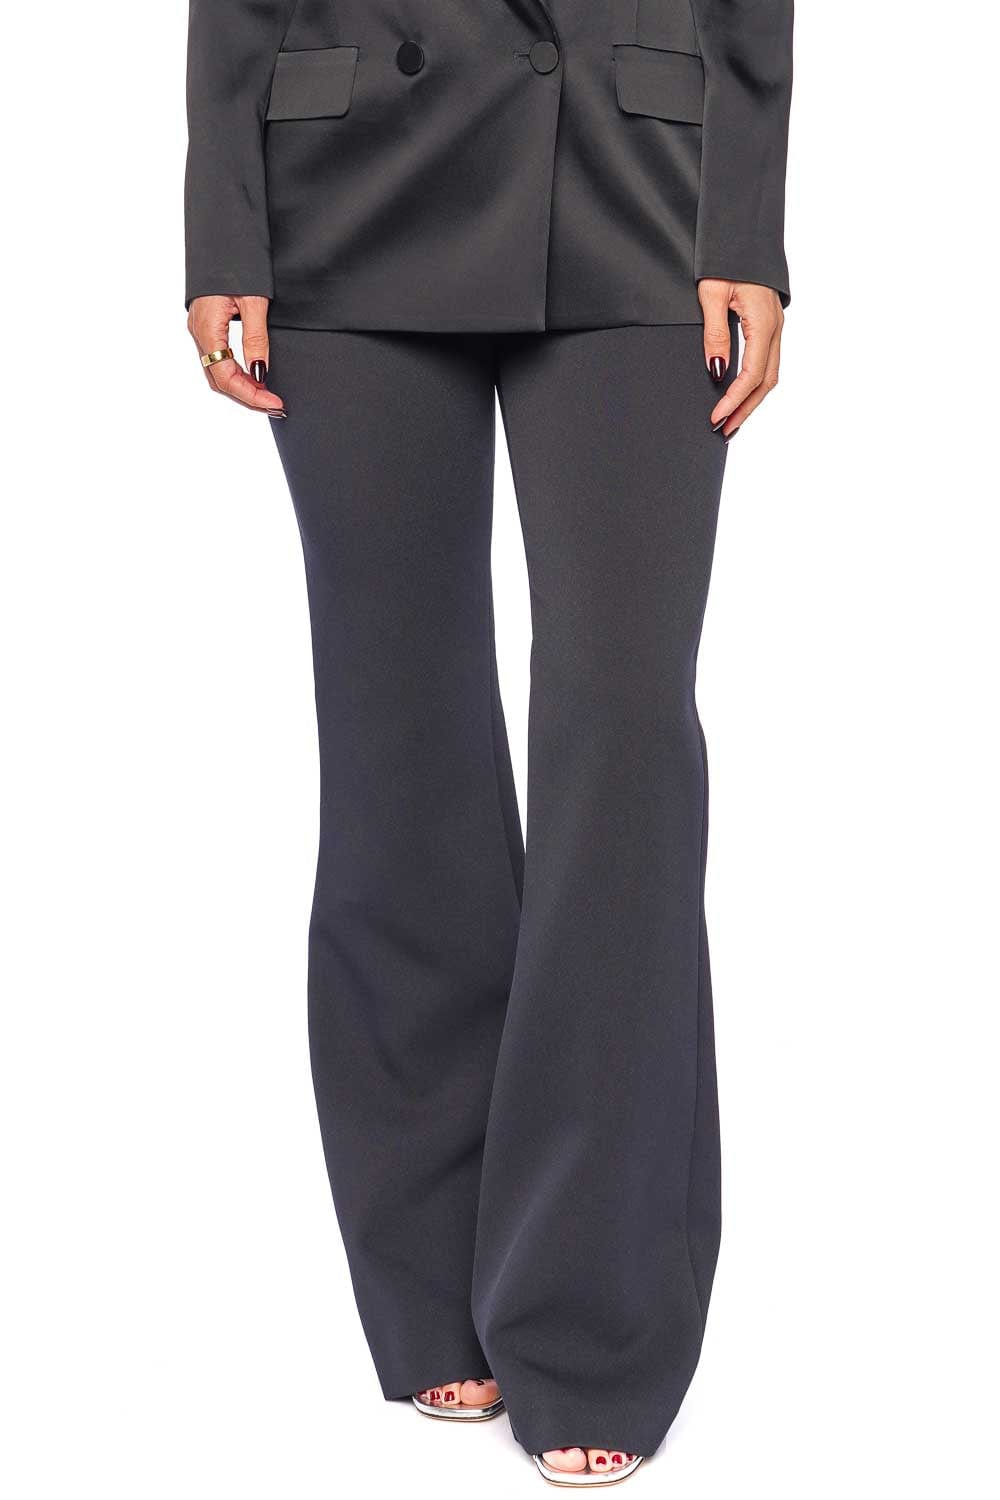 Jenna Black Tailored Trousers